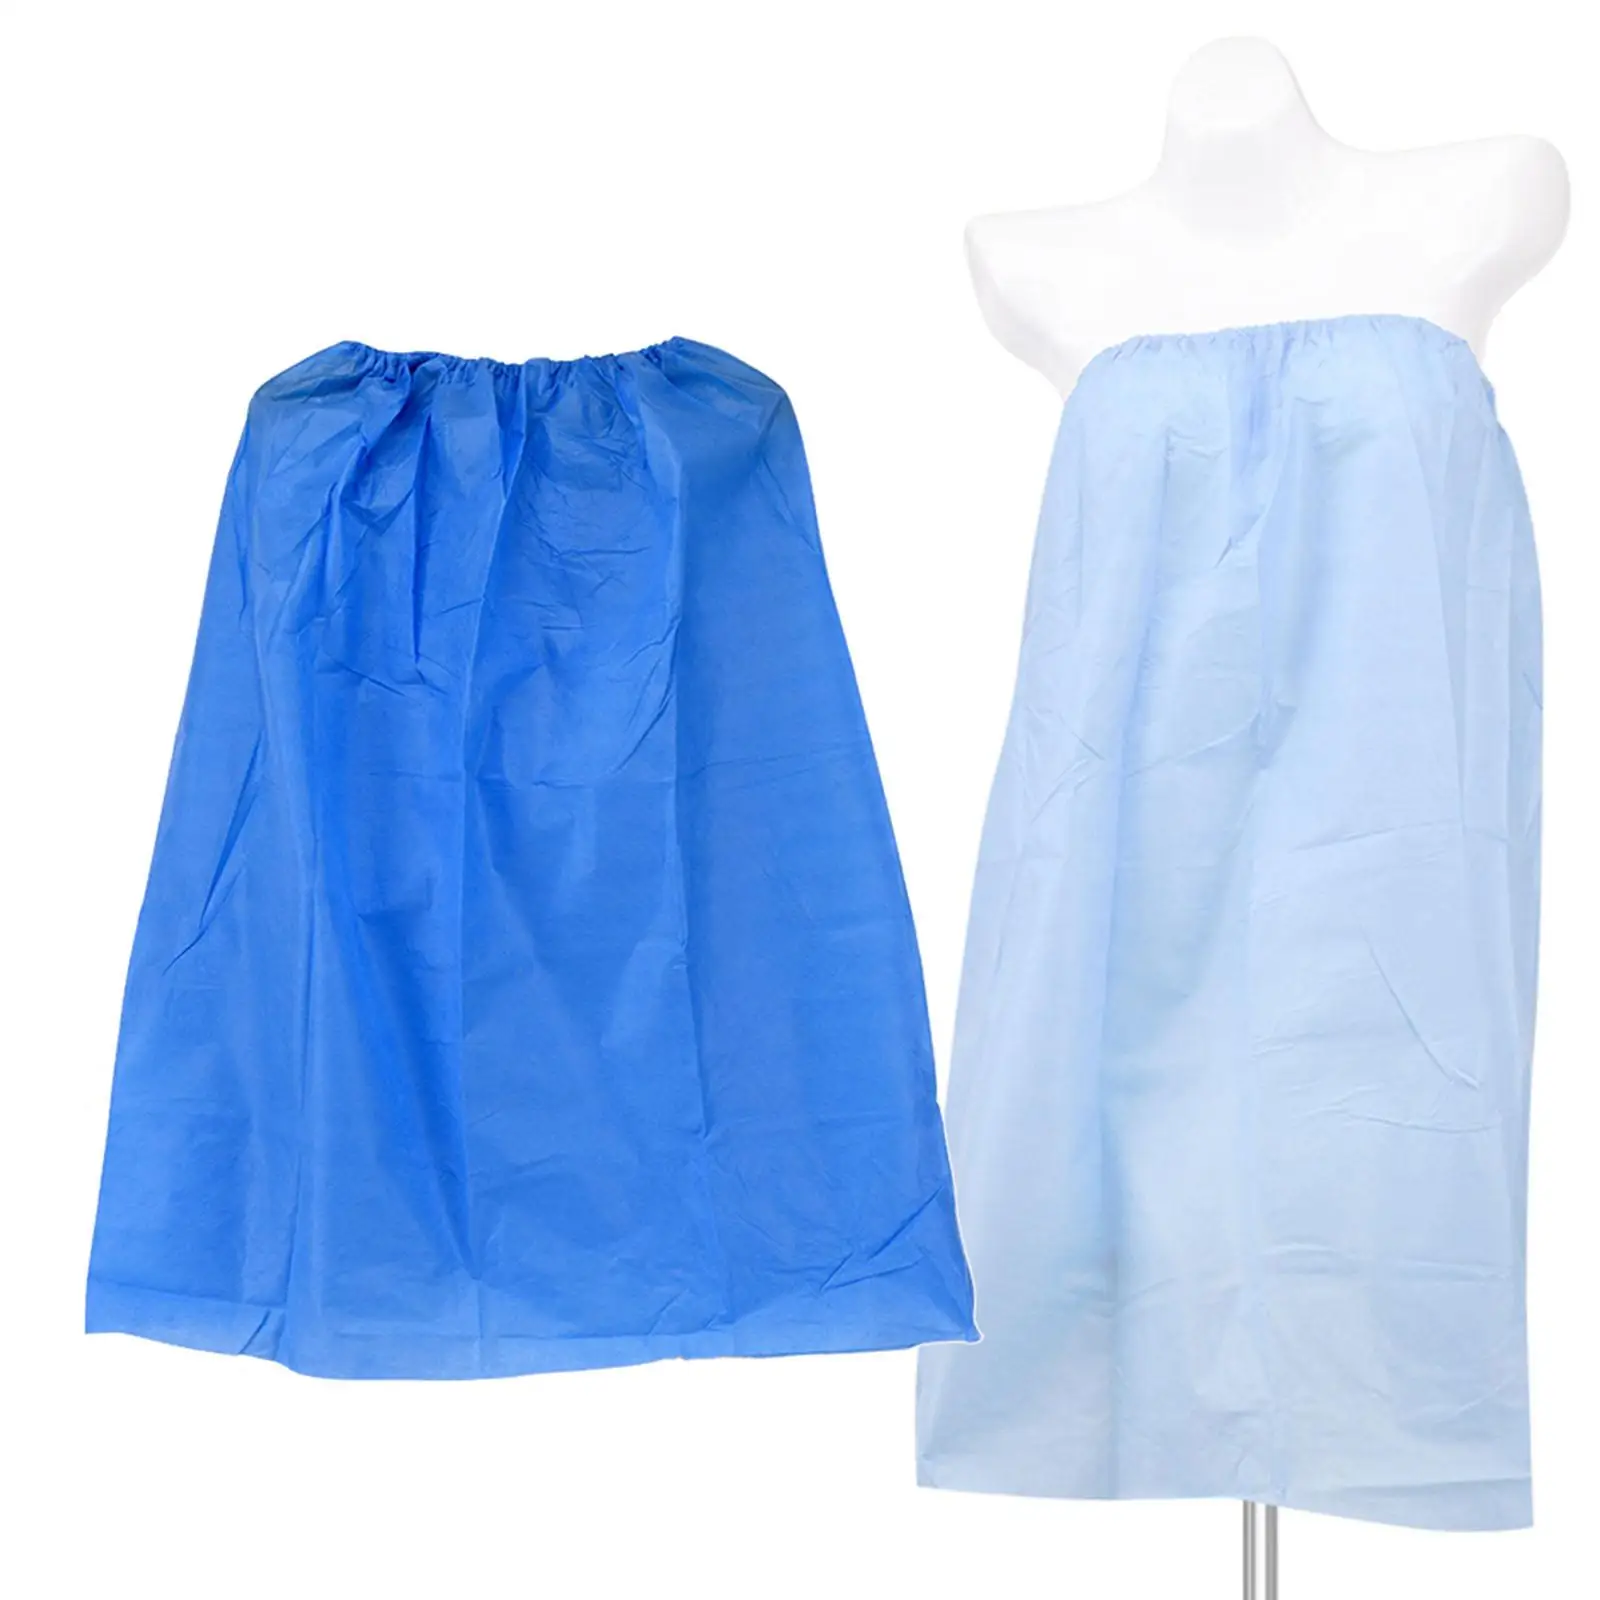 10pcs Sauna Disposable Bath Skirt Bath Wrap for Spa for Women Girls Blue